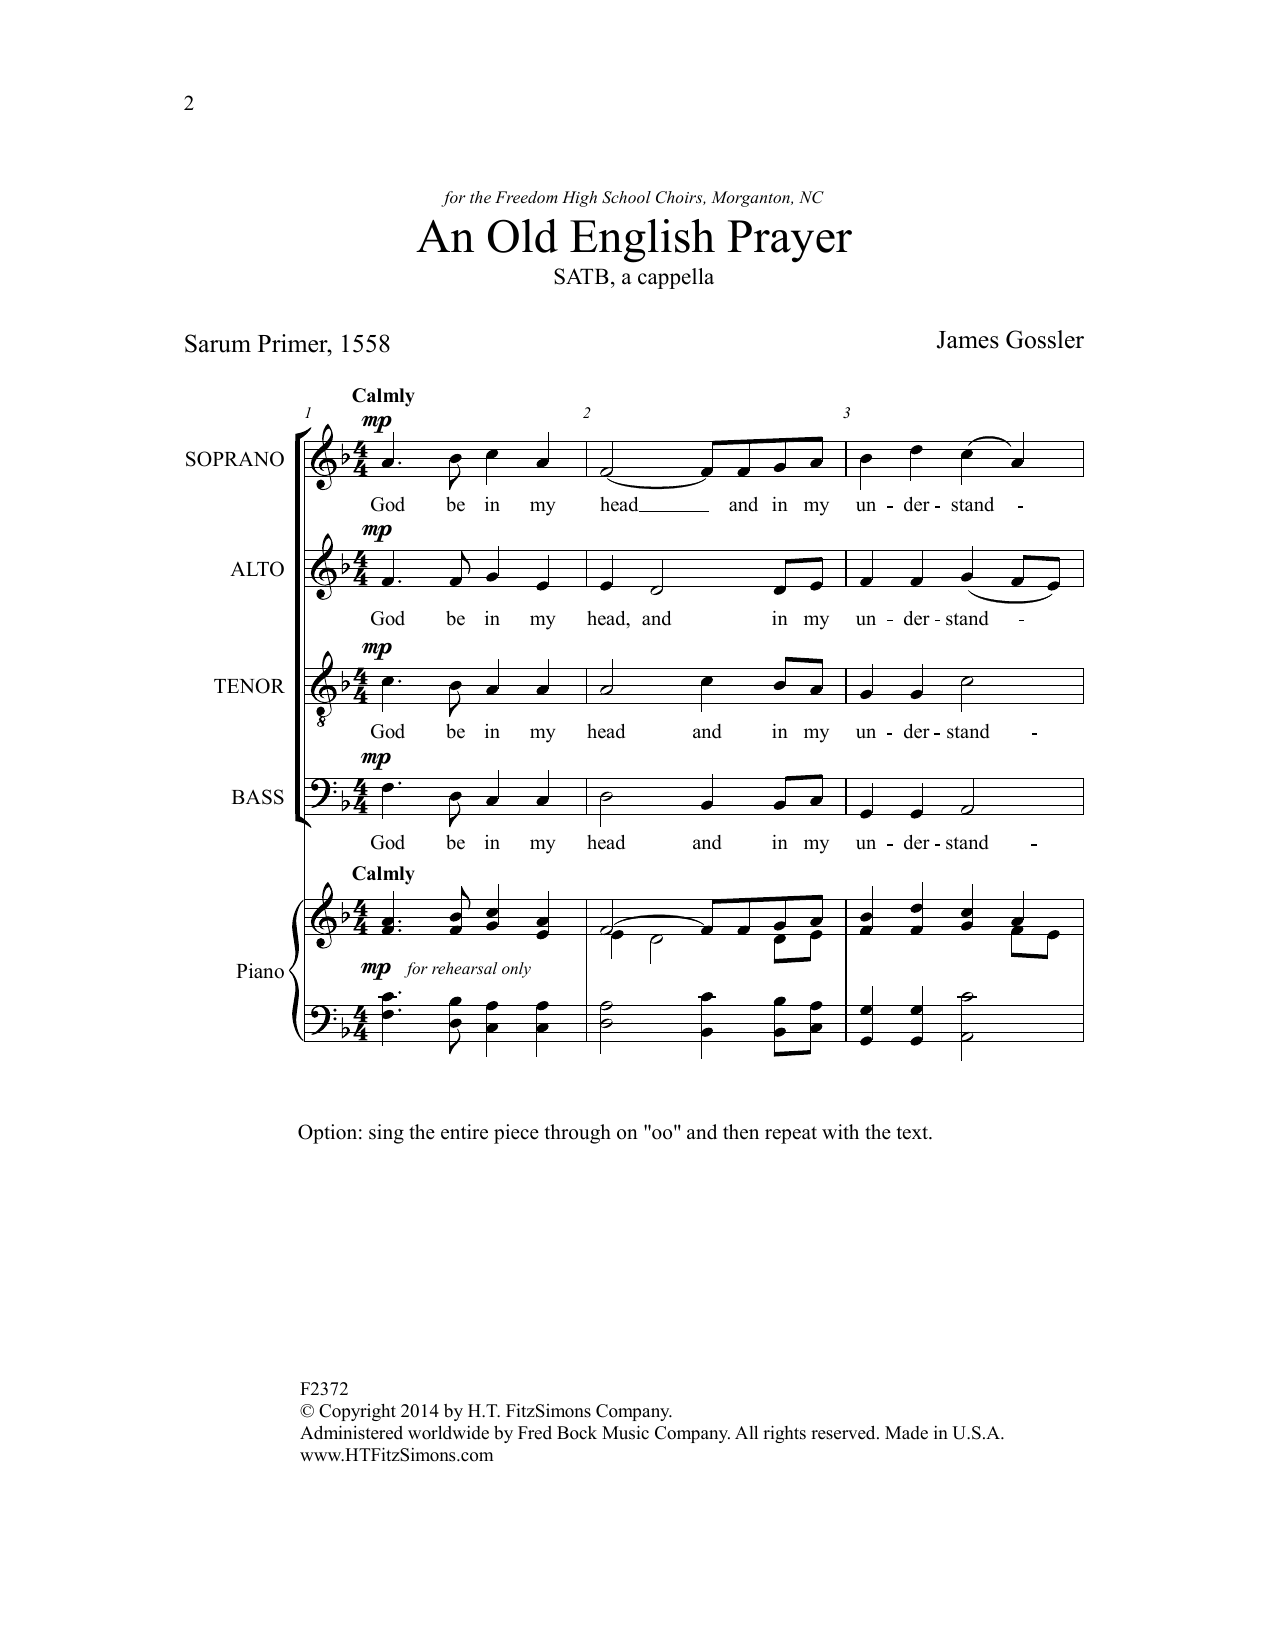 James Gossler An Old English Prayer Sheet Music Notes & Chords for Choral - Download or Print PDF